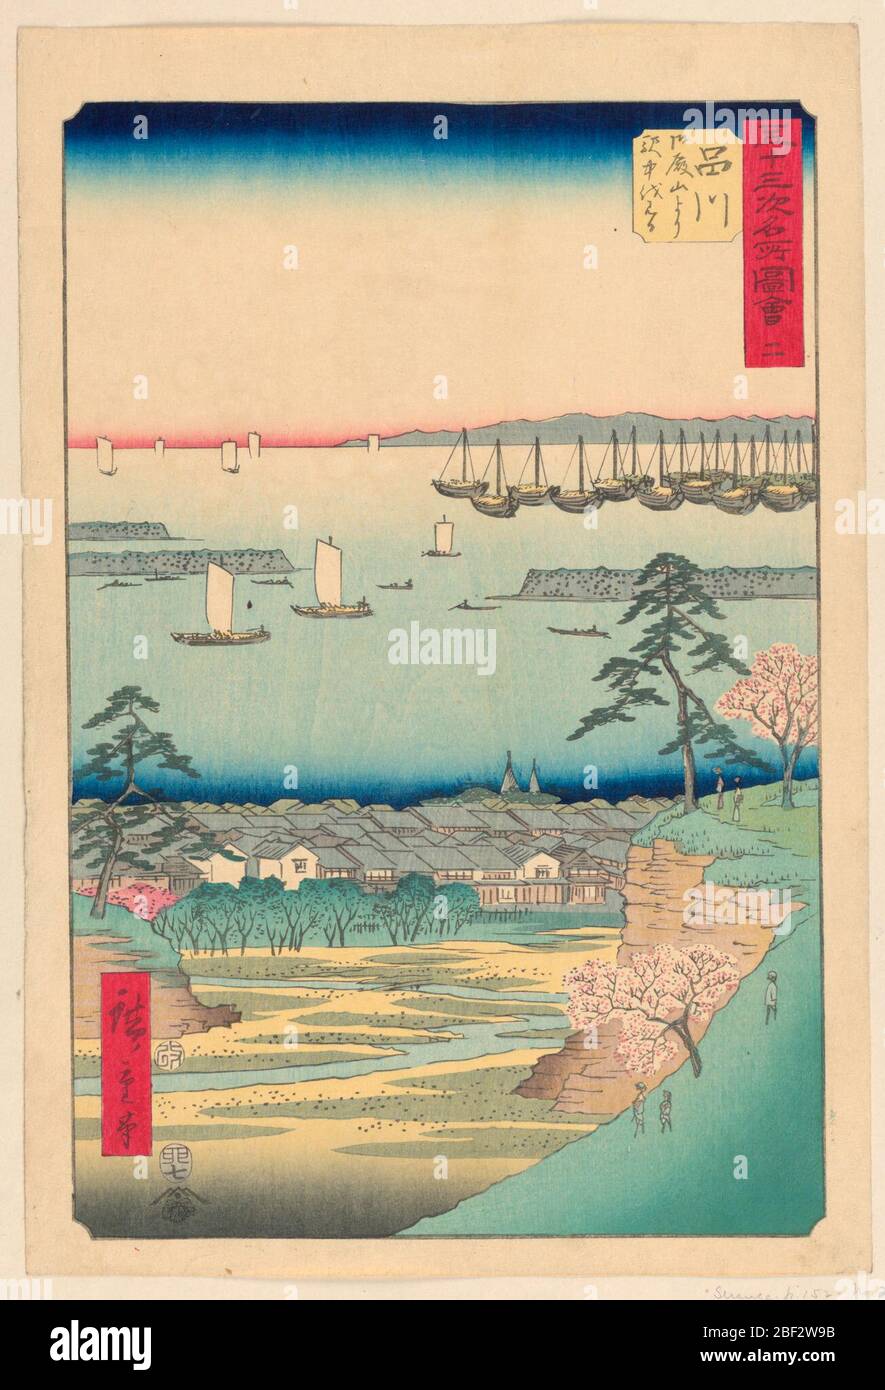 Shinagawa from the series 53 Stations of Tokaido. Hirogshige: Issued between Tsuta-ya Kichizo (ca. 1800s-60s). aratame [approved] seal plus year month seal: Hare VII [1855]. Stock Photo